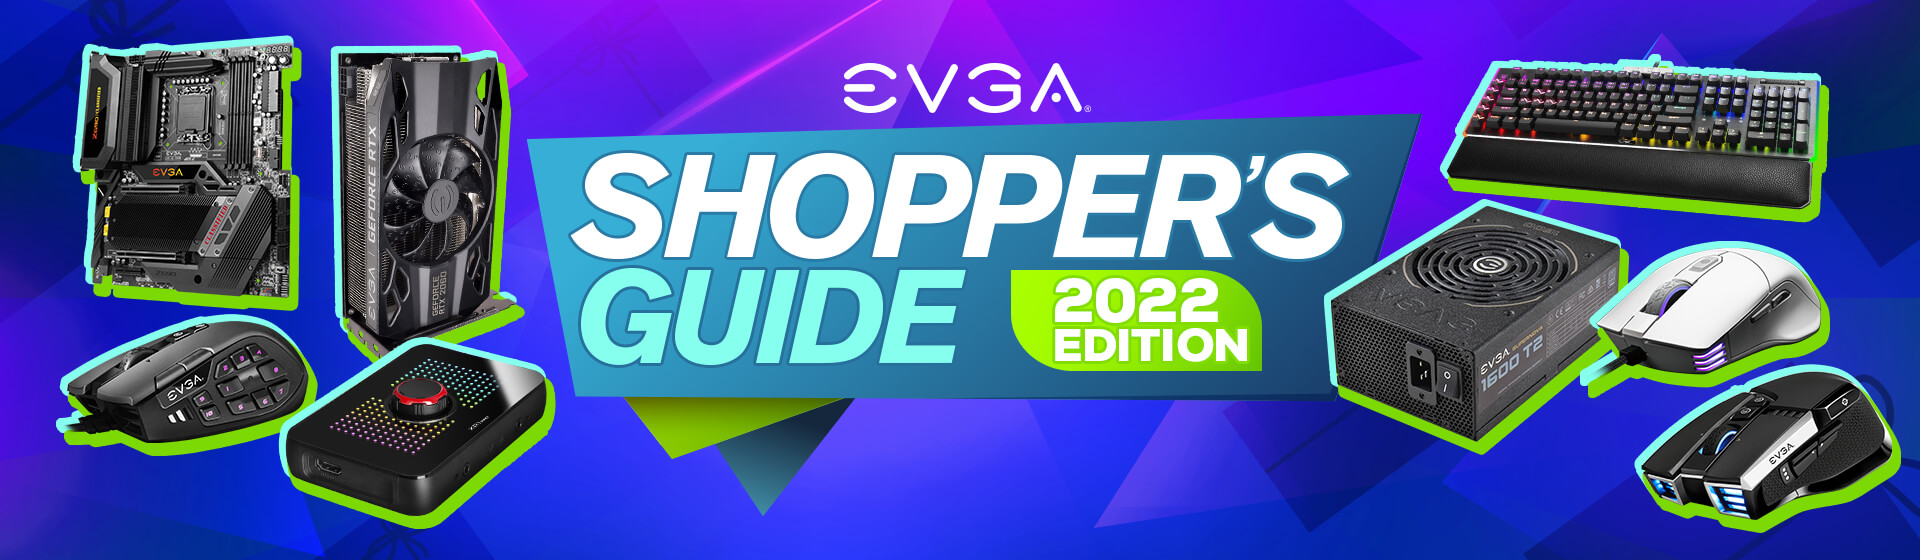 EVGA Shoppers Guide 2022 Edition